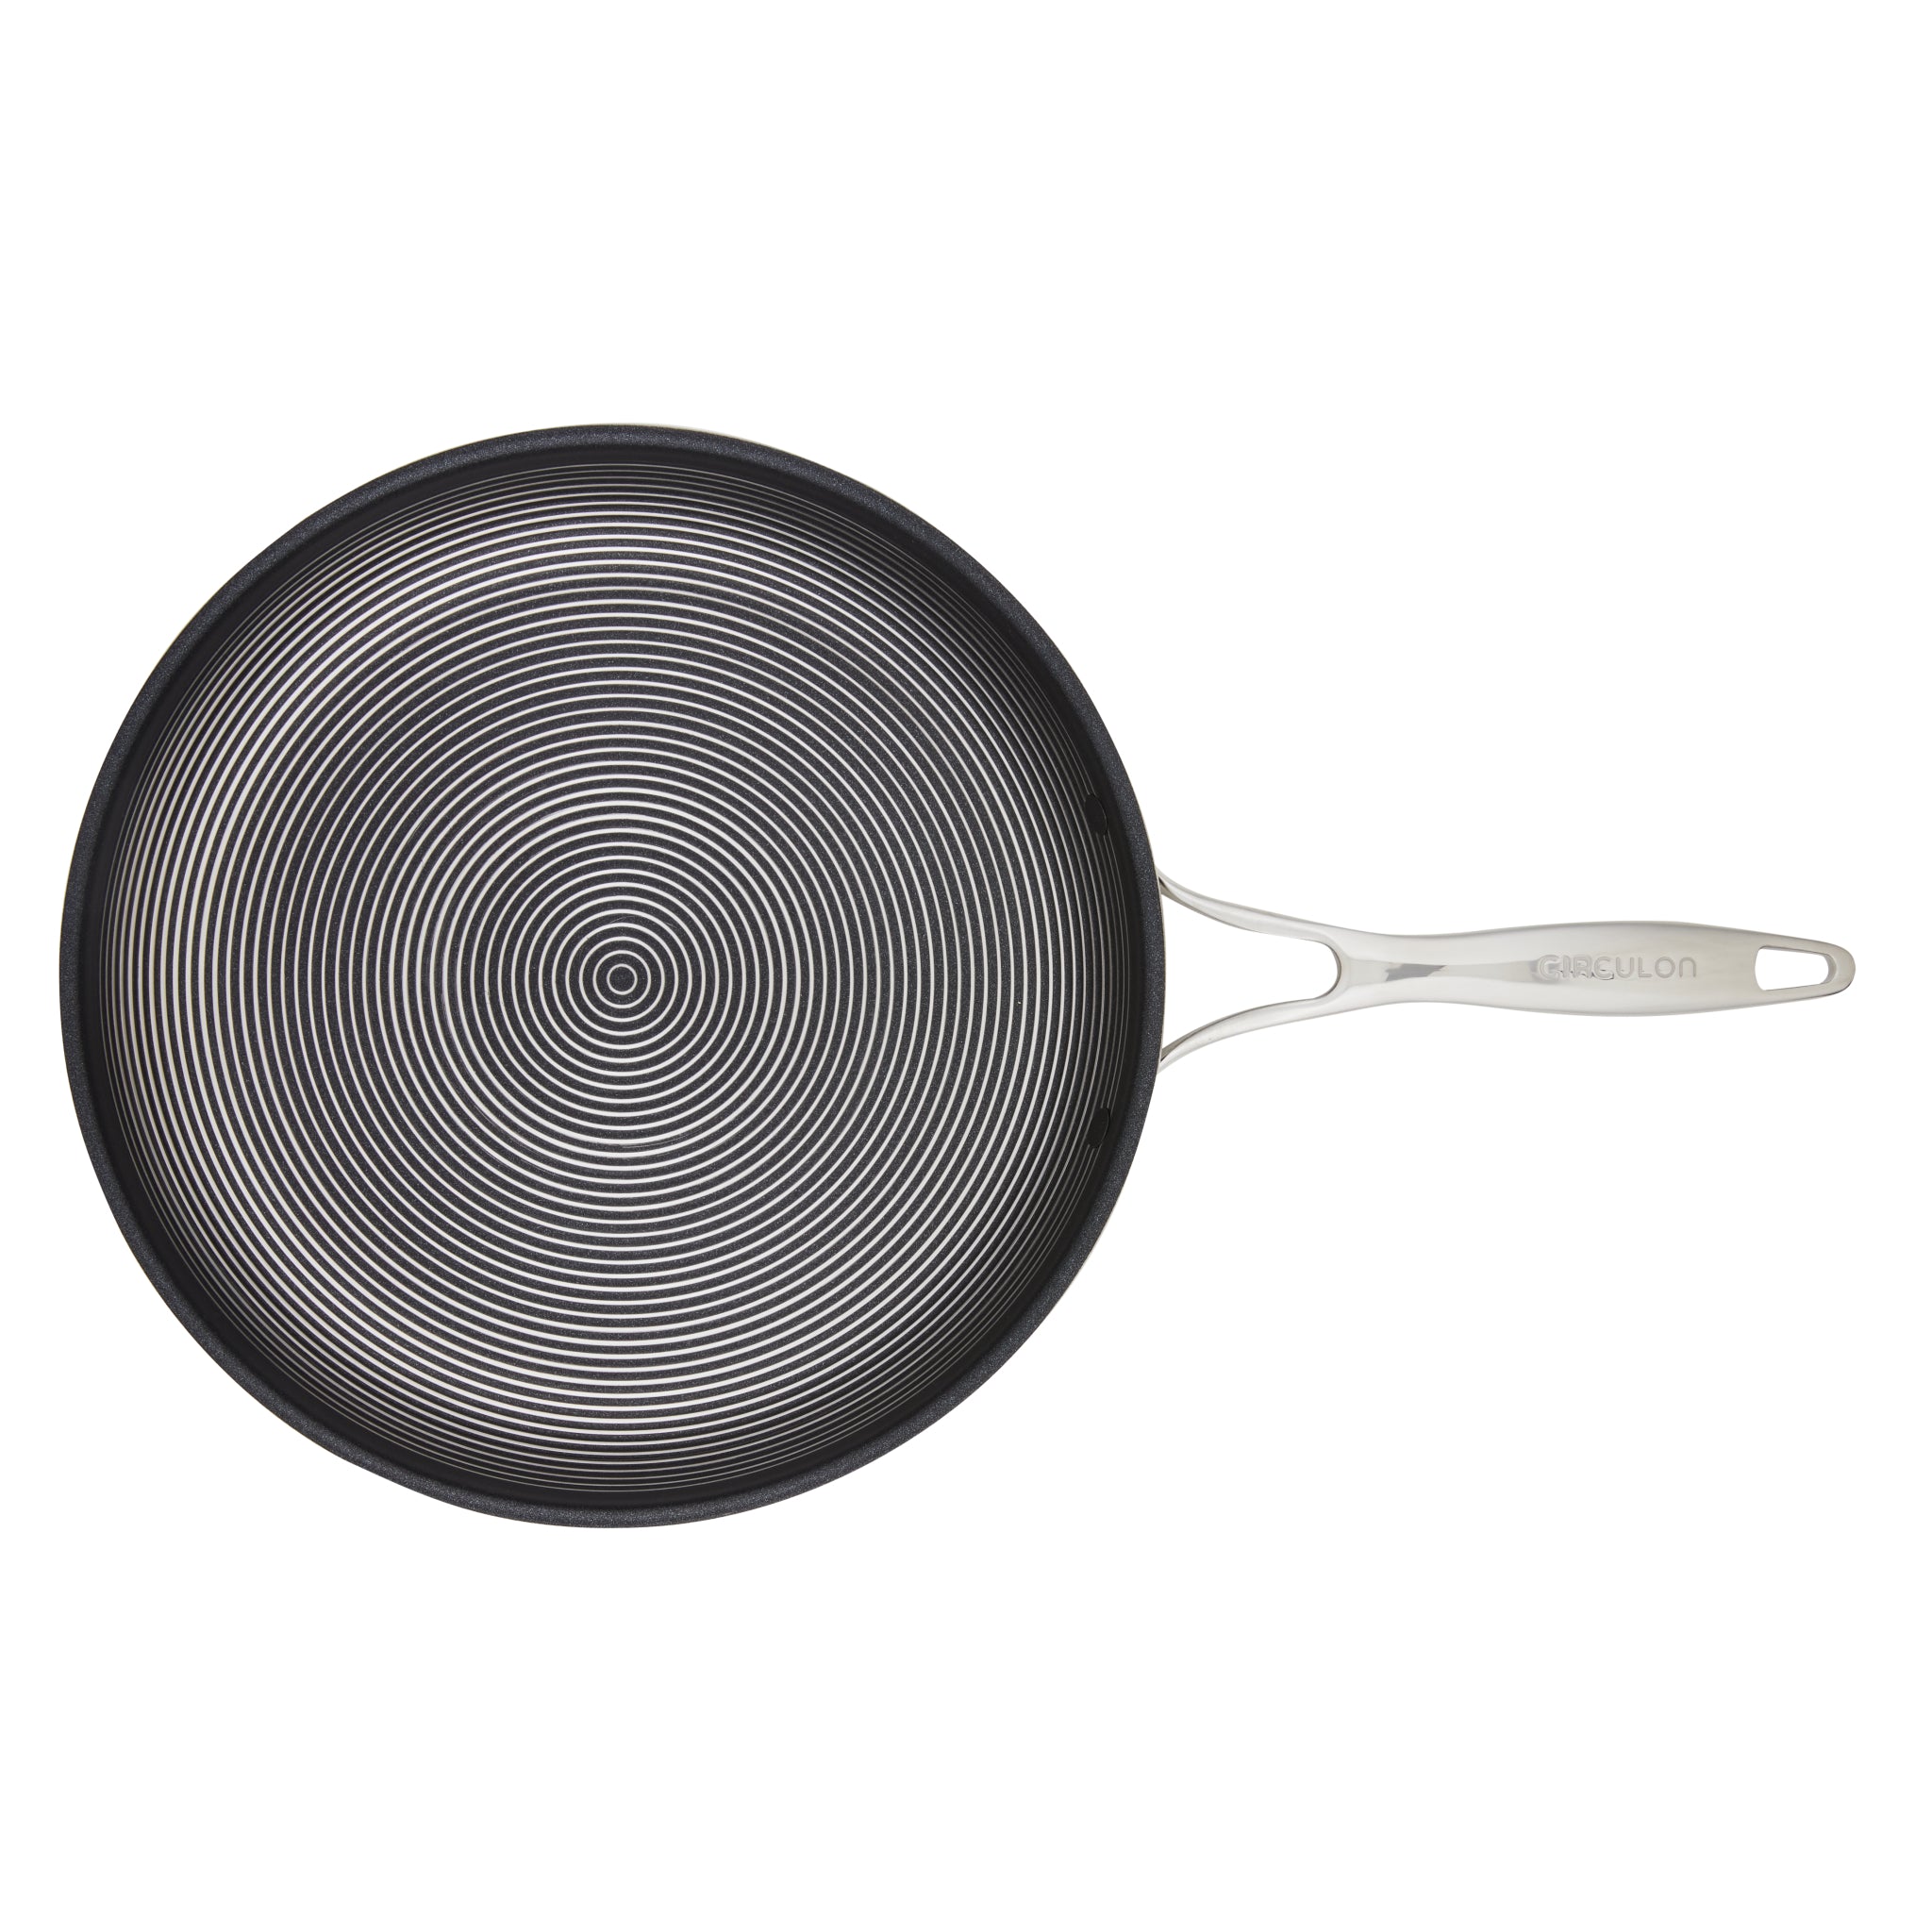 Circulon 12.5 Clad Stainless Steel Frying Pan 